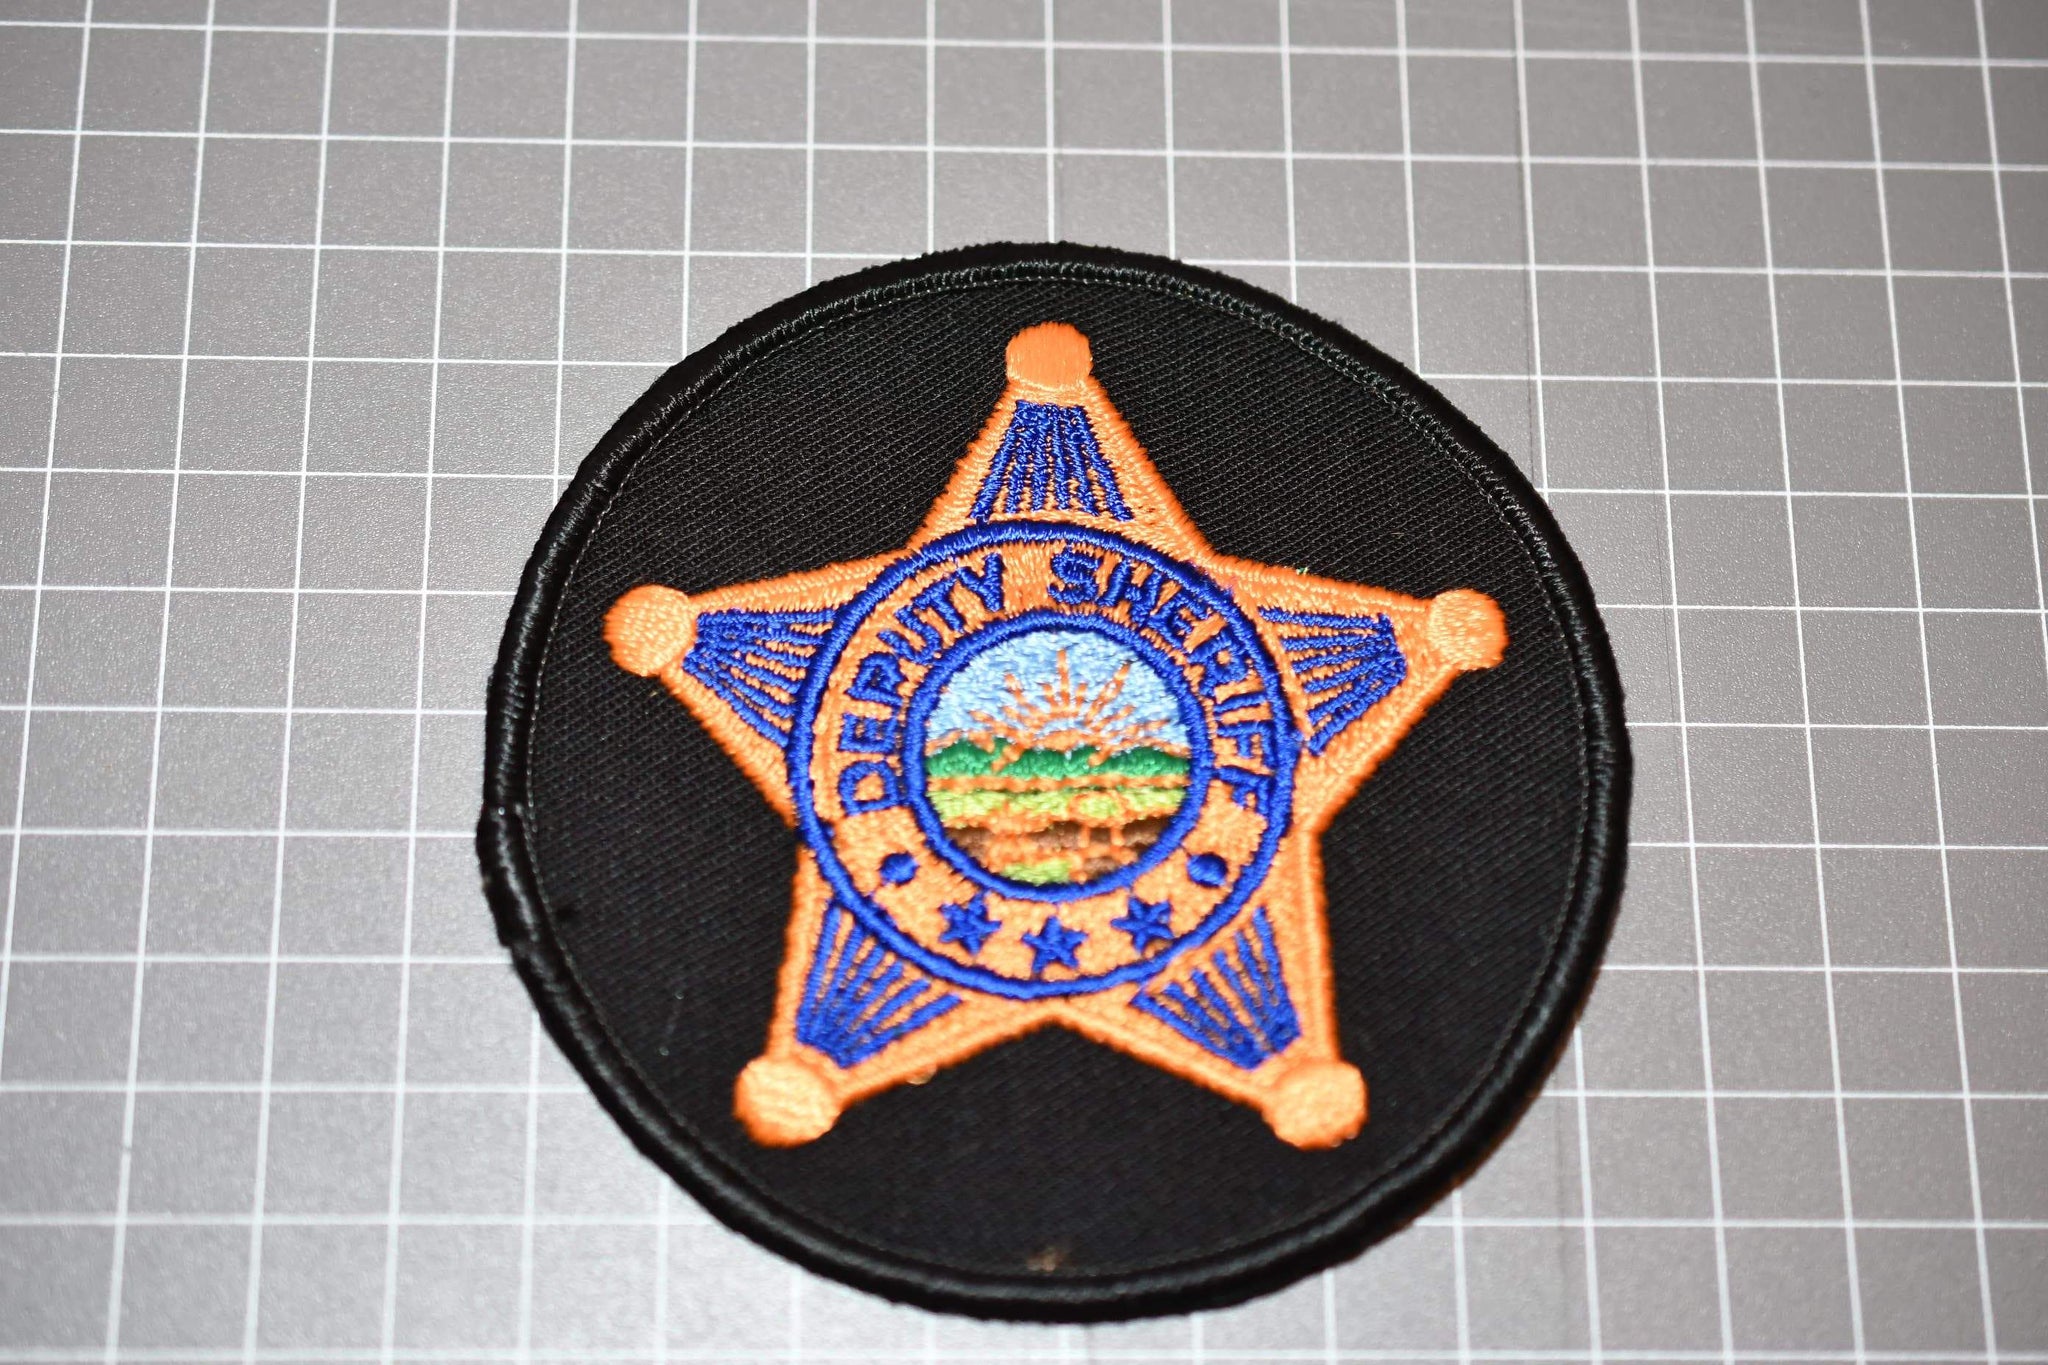 Deputy Sheriff Generic Patch (B6)